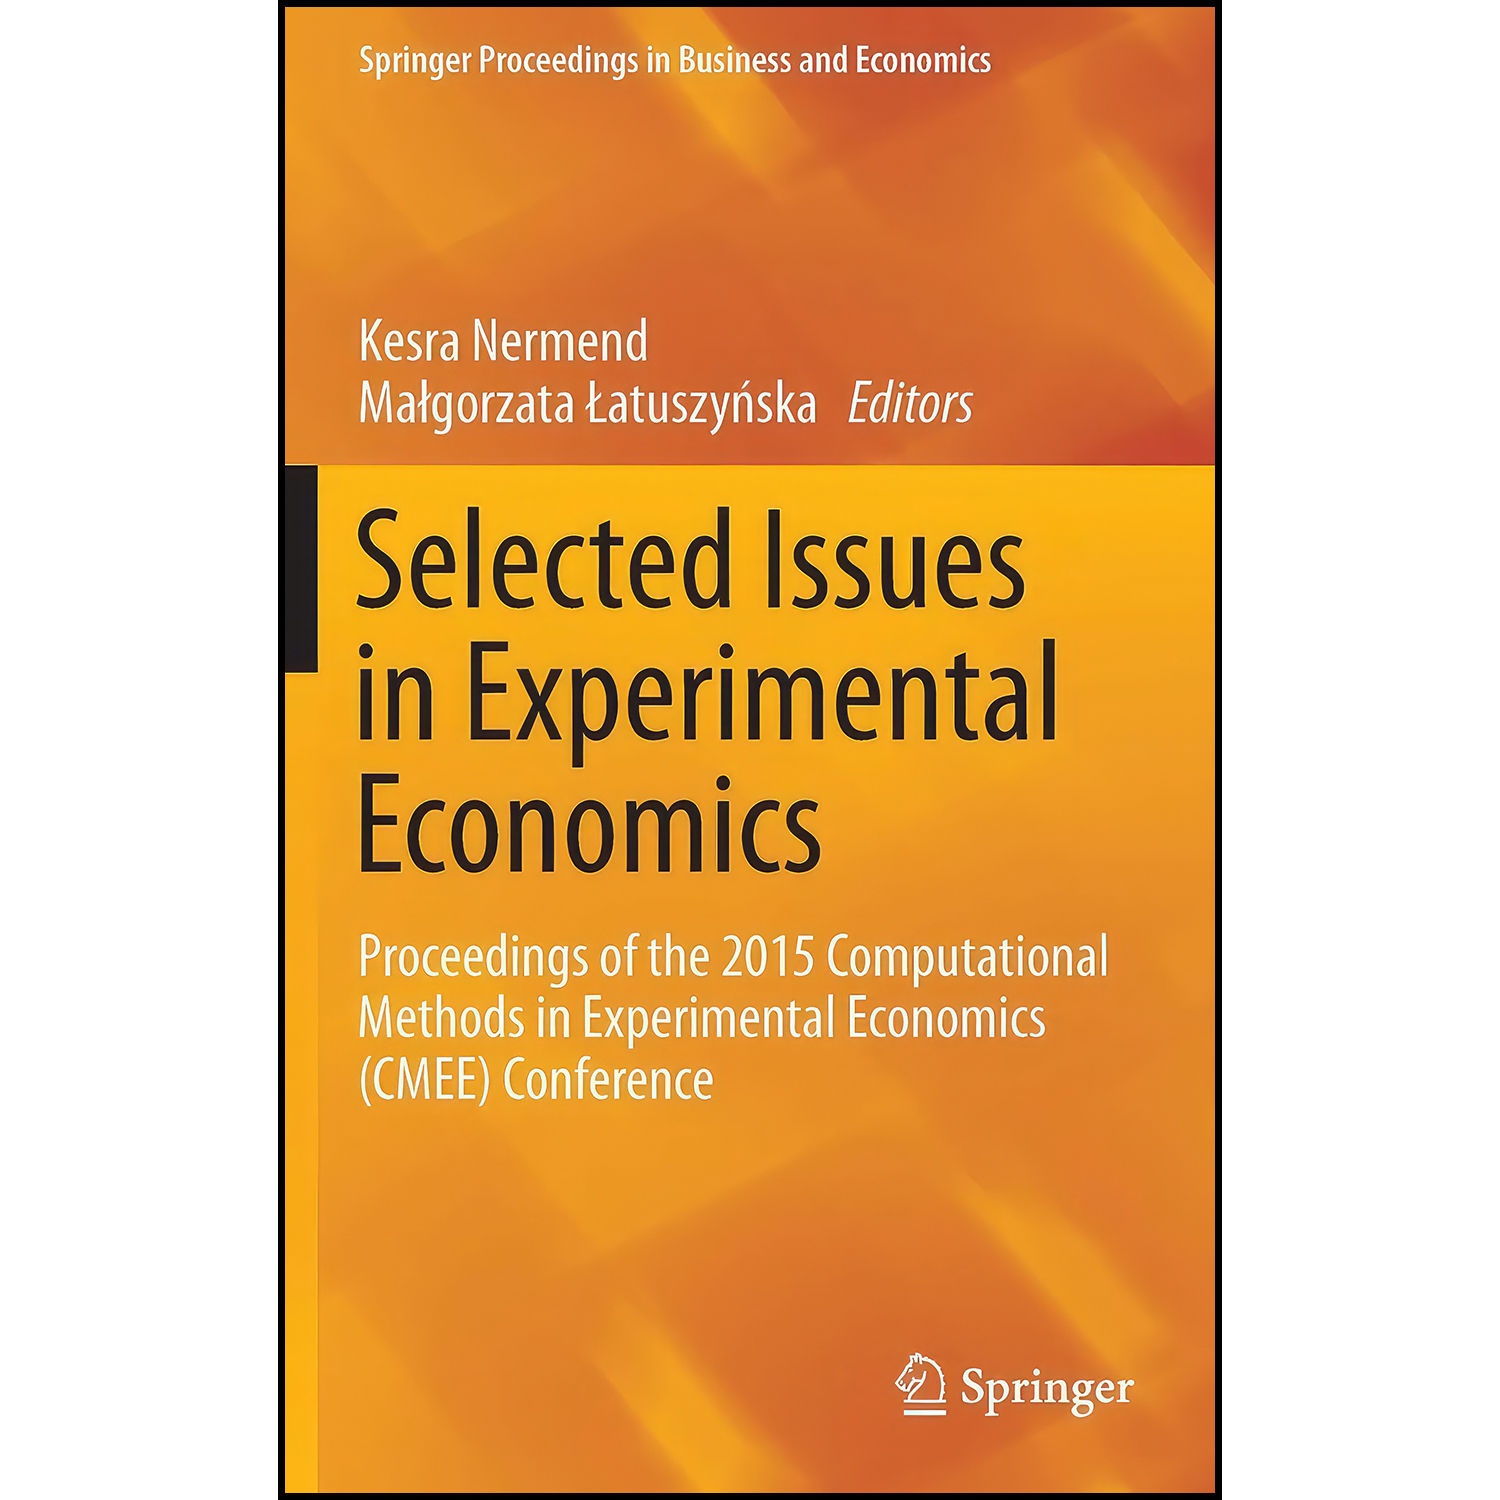 کتاب Selected Issues in Experimental Economics اثر جمعي از نويسندگان انتشارات Springer